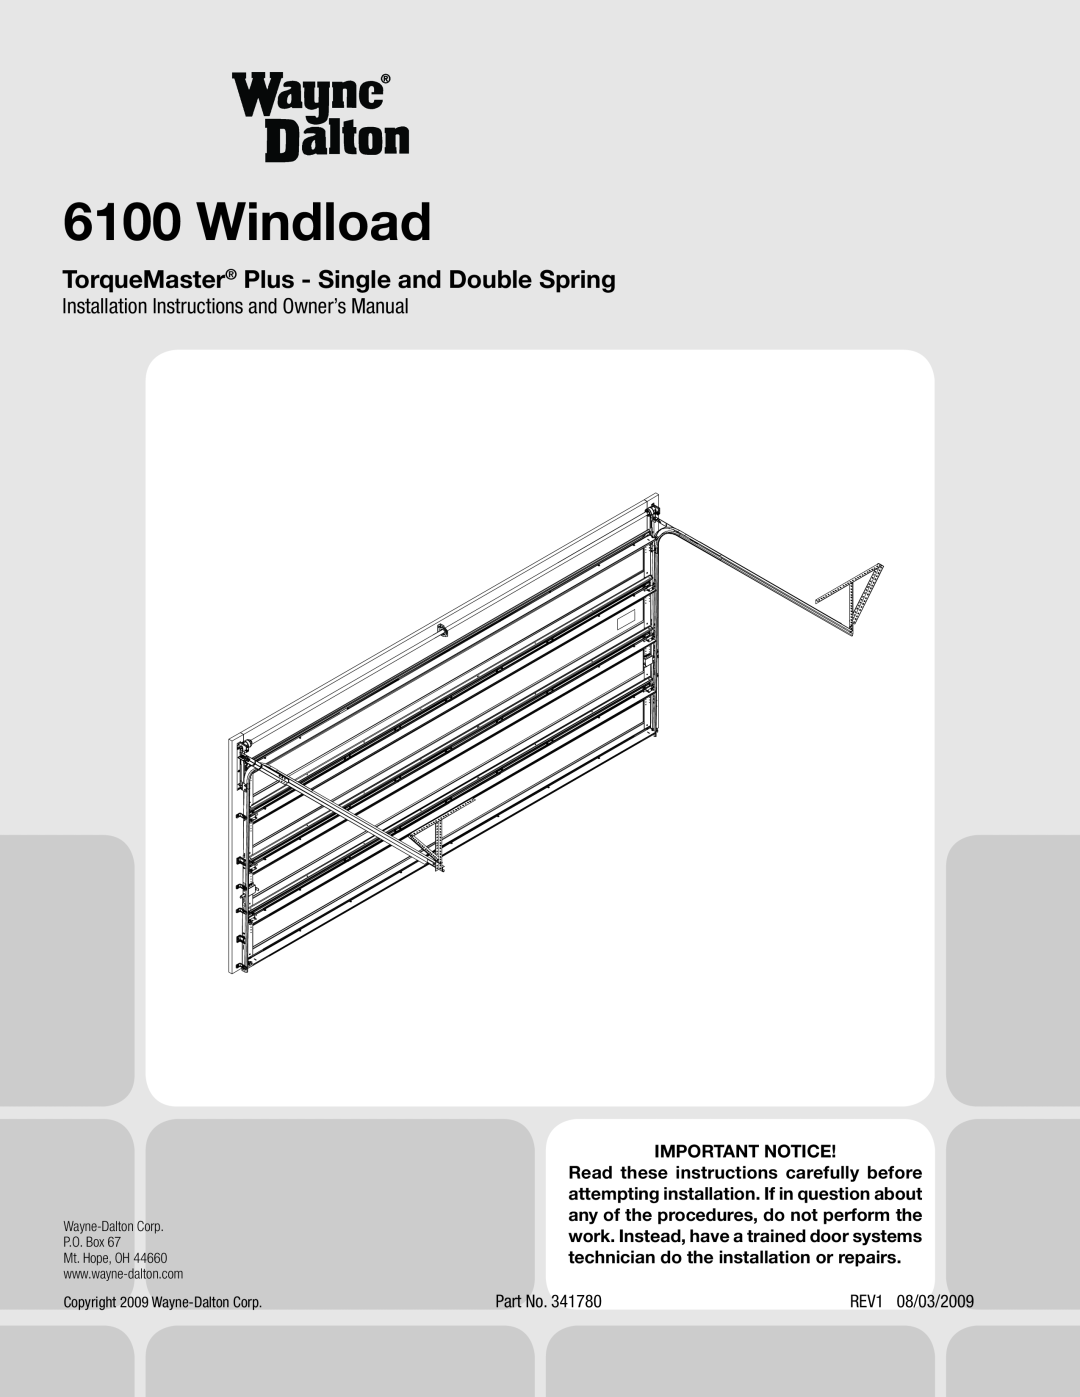 Wayne-Dalton 6100 installation instructions Windload, TorqueMaster Plus - Single and Double Spring 